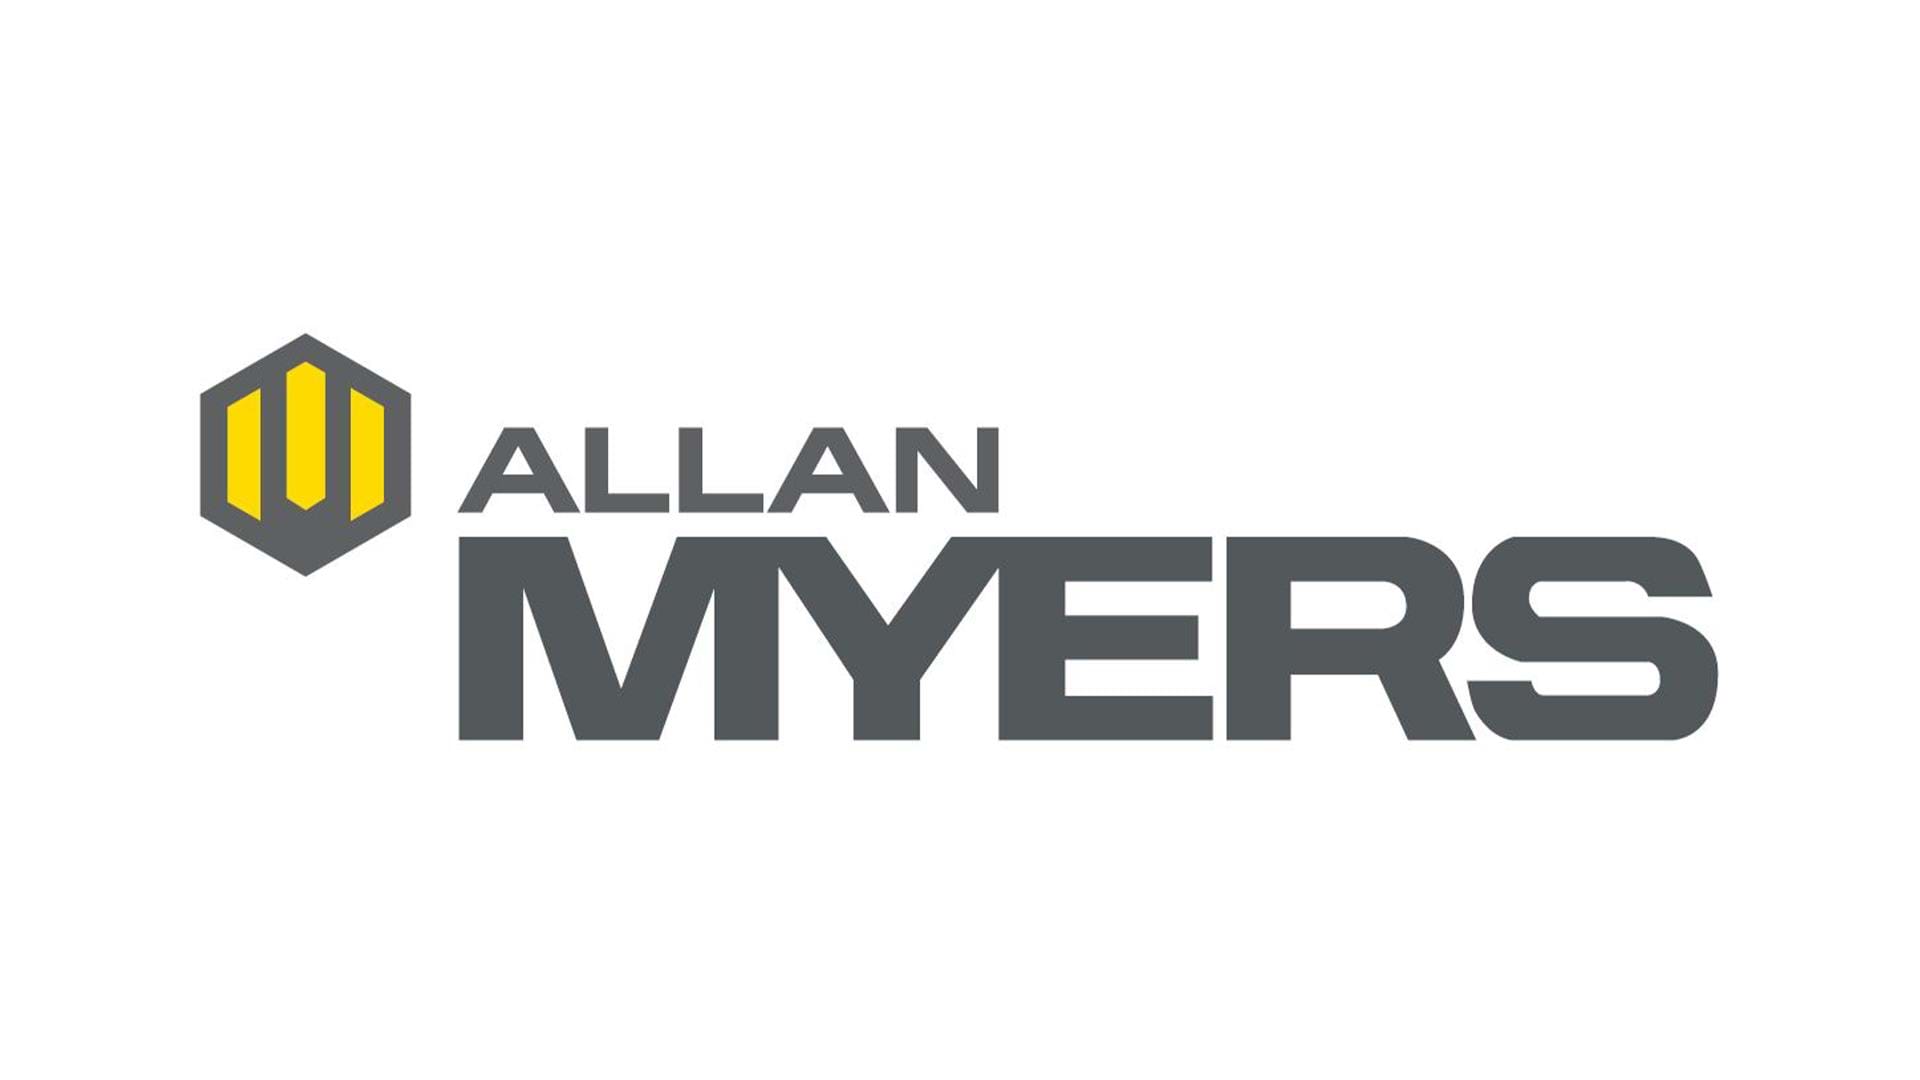 Allan Myers